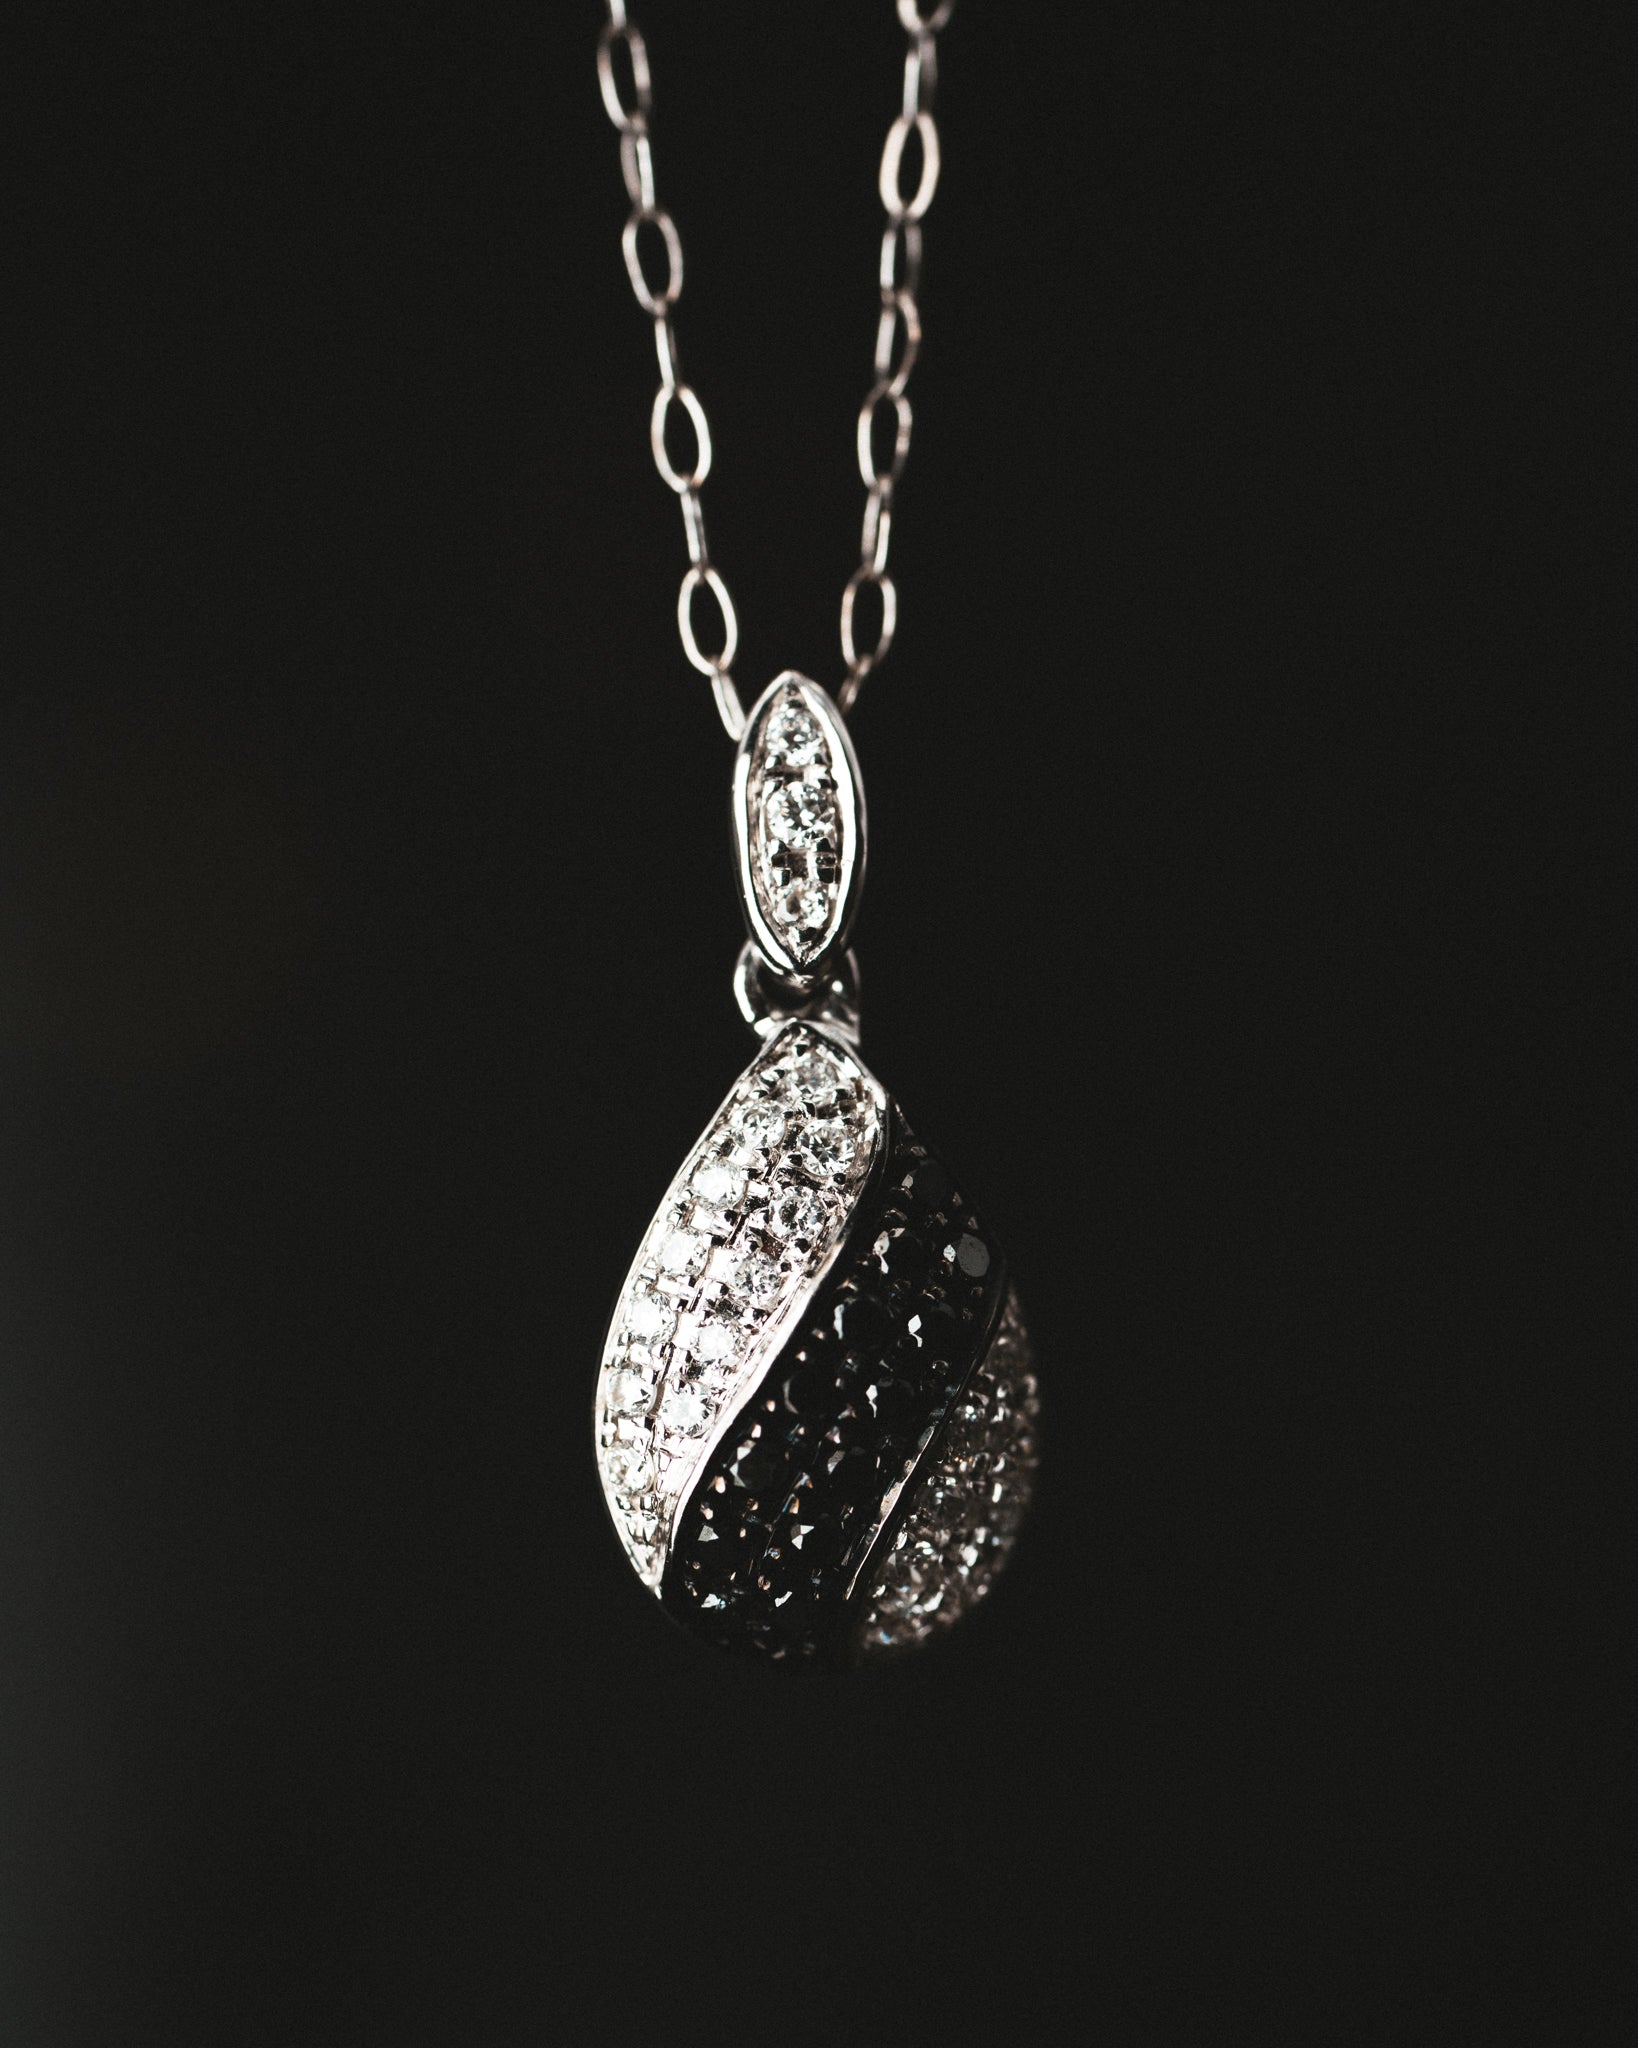 14k White Gold Small Black and White Pave' Diamond Pendant